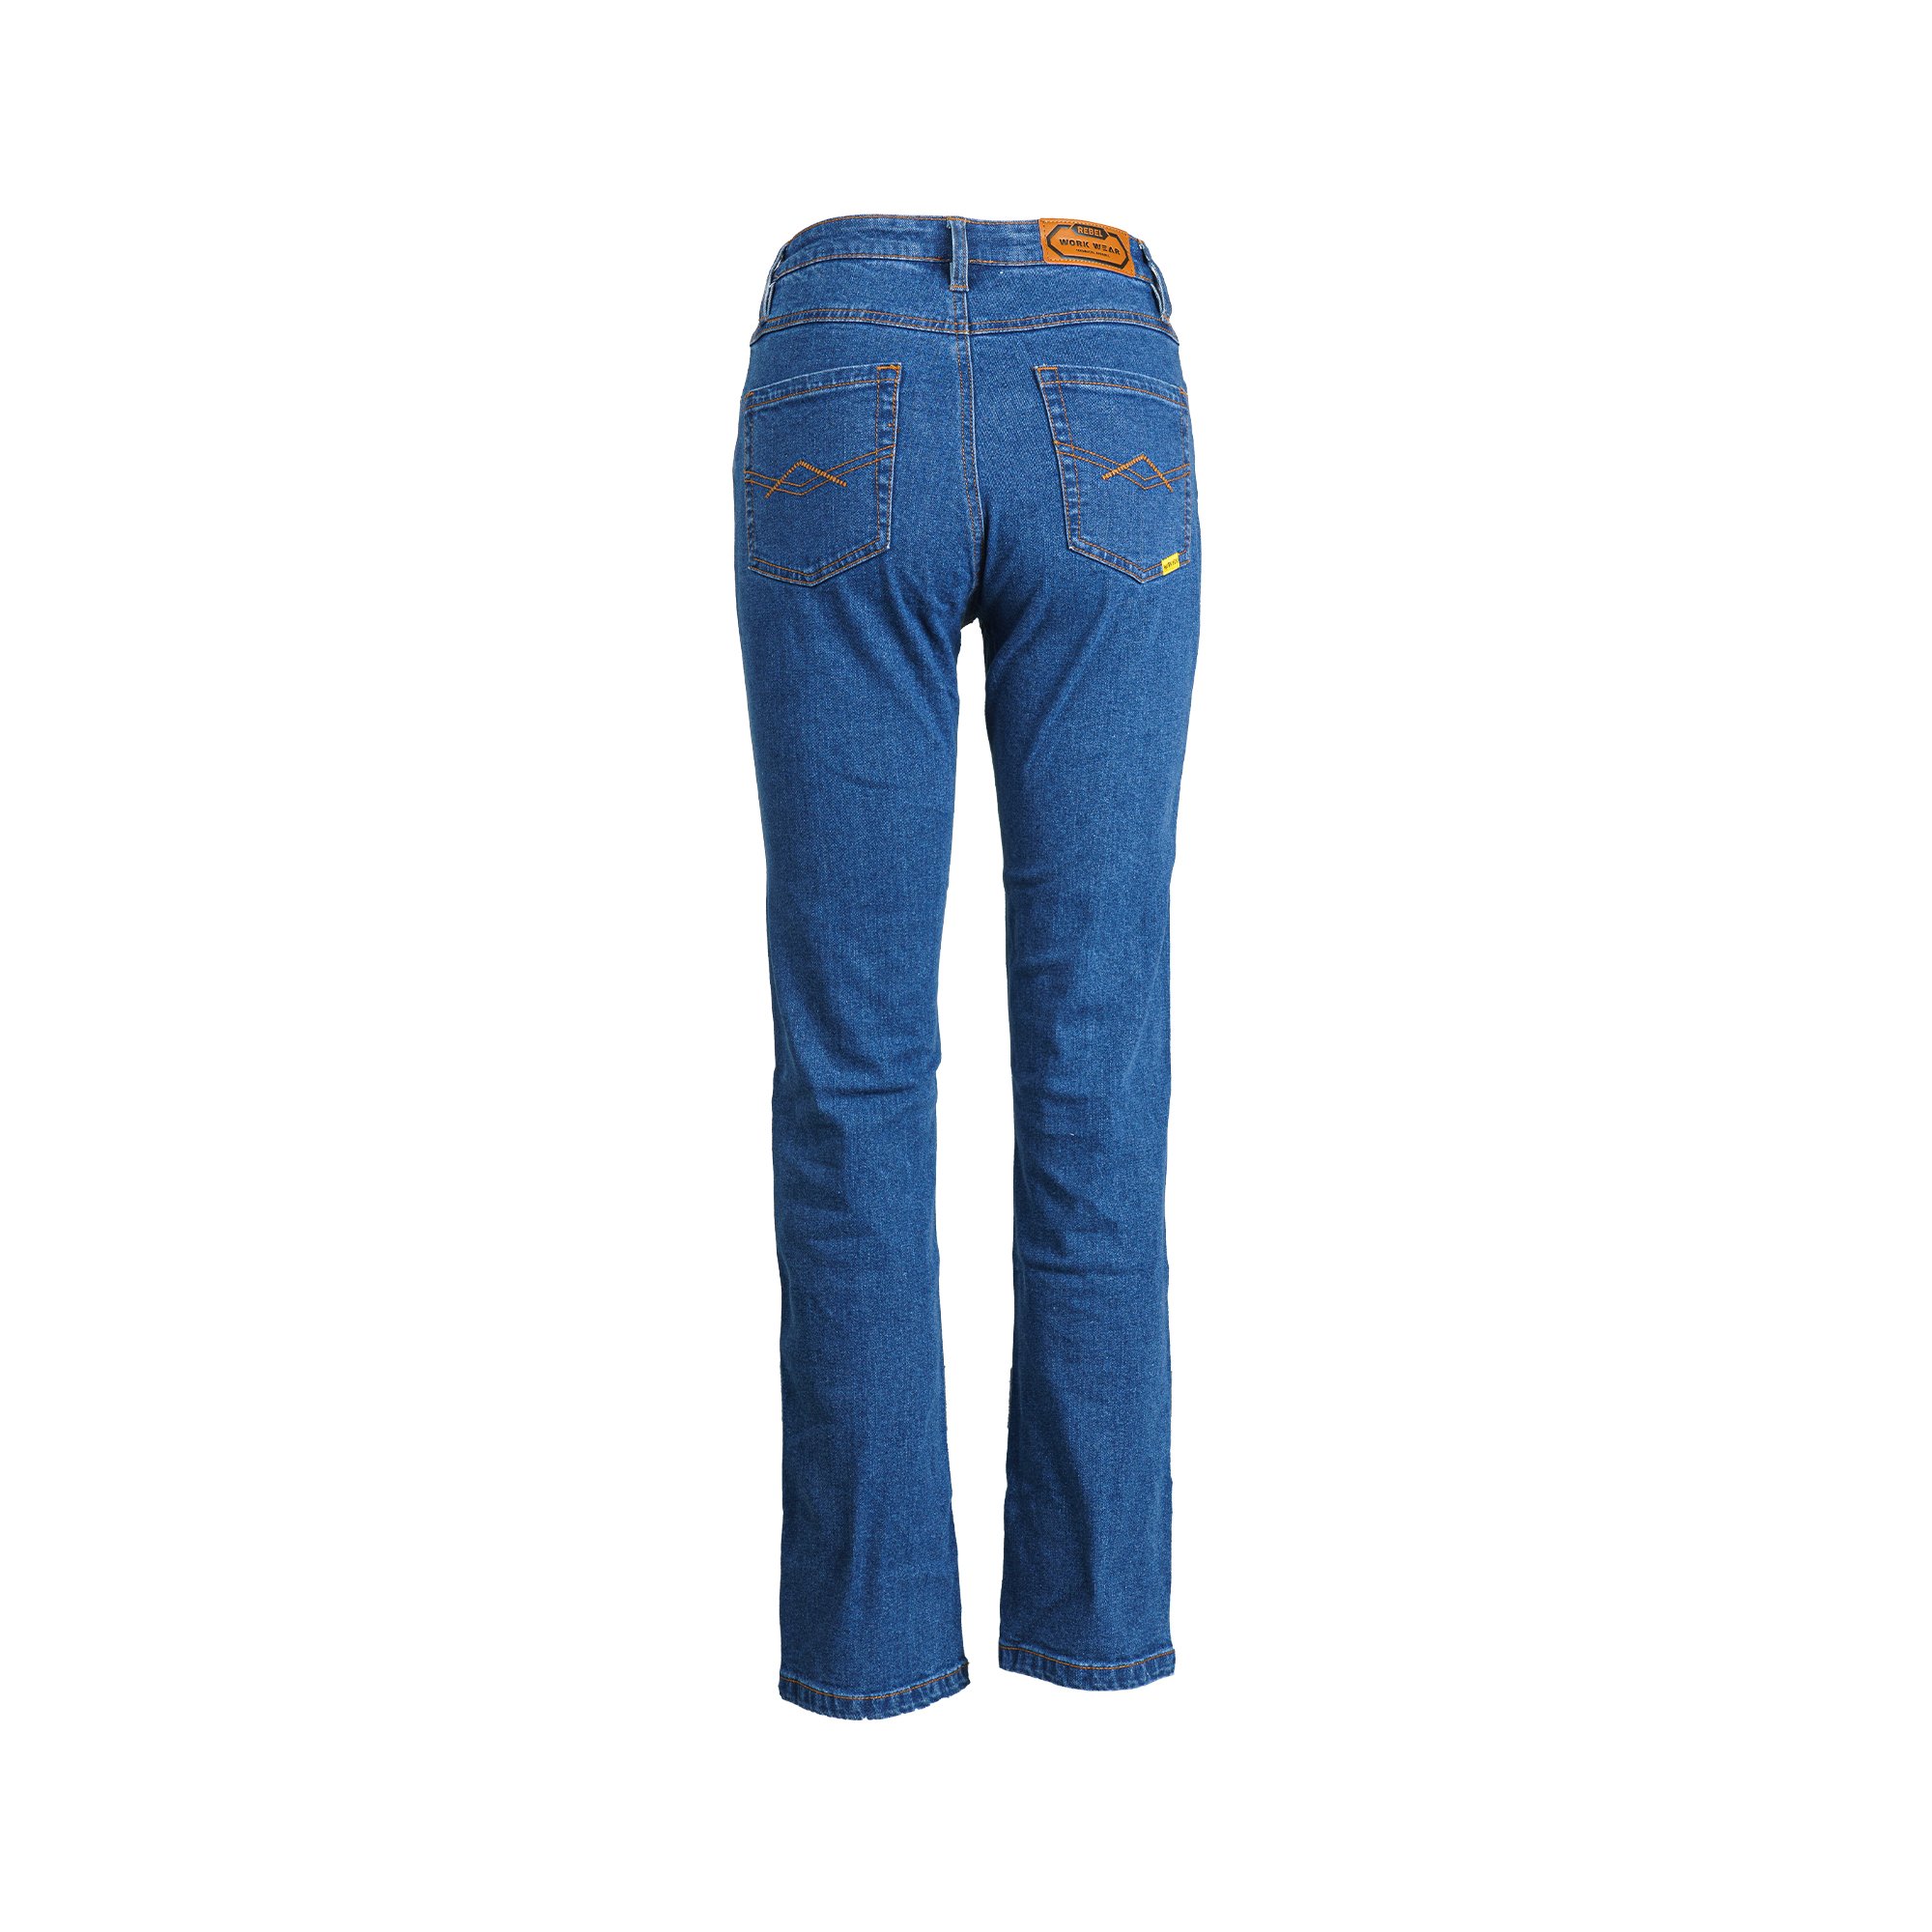 REBEL Ladies Workwear Jeans Mid Blue - Protekta Safety Gear